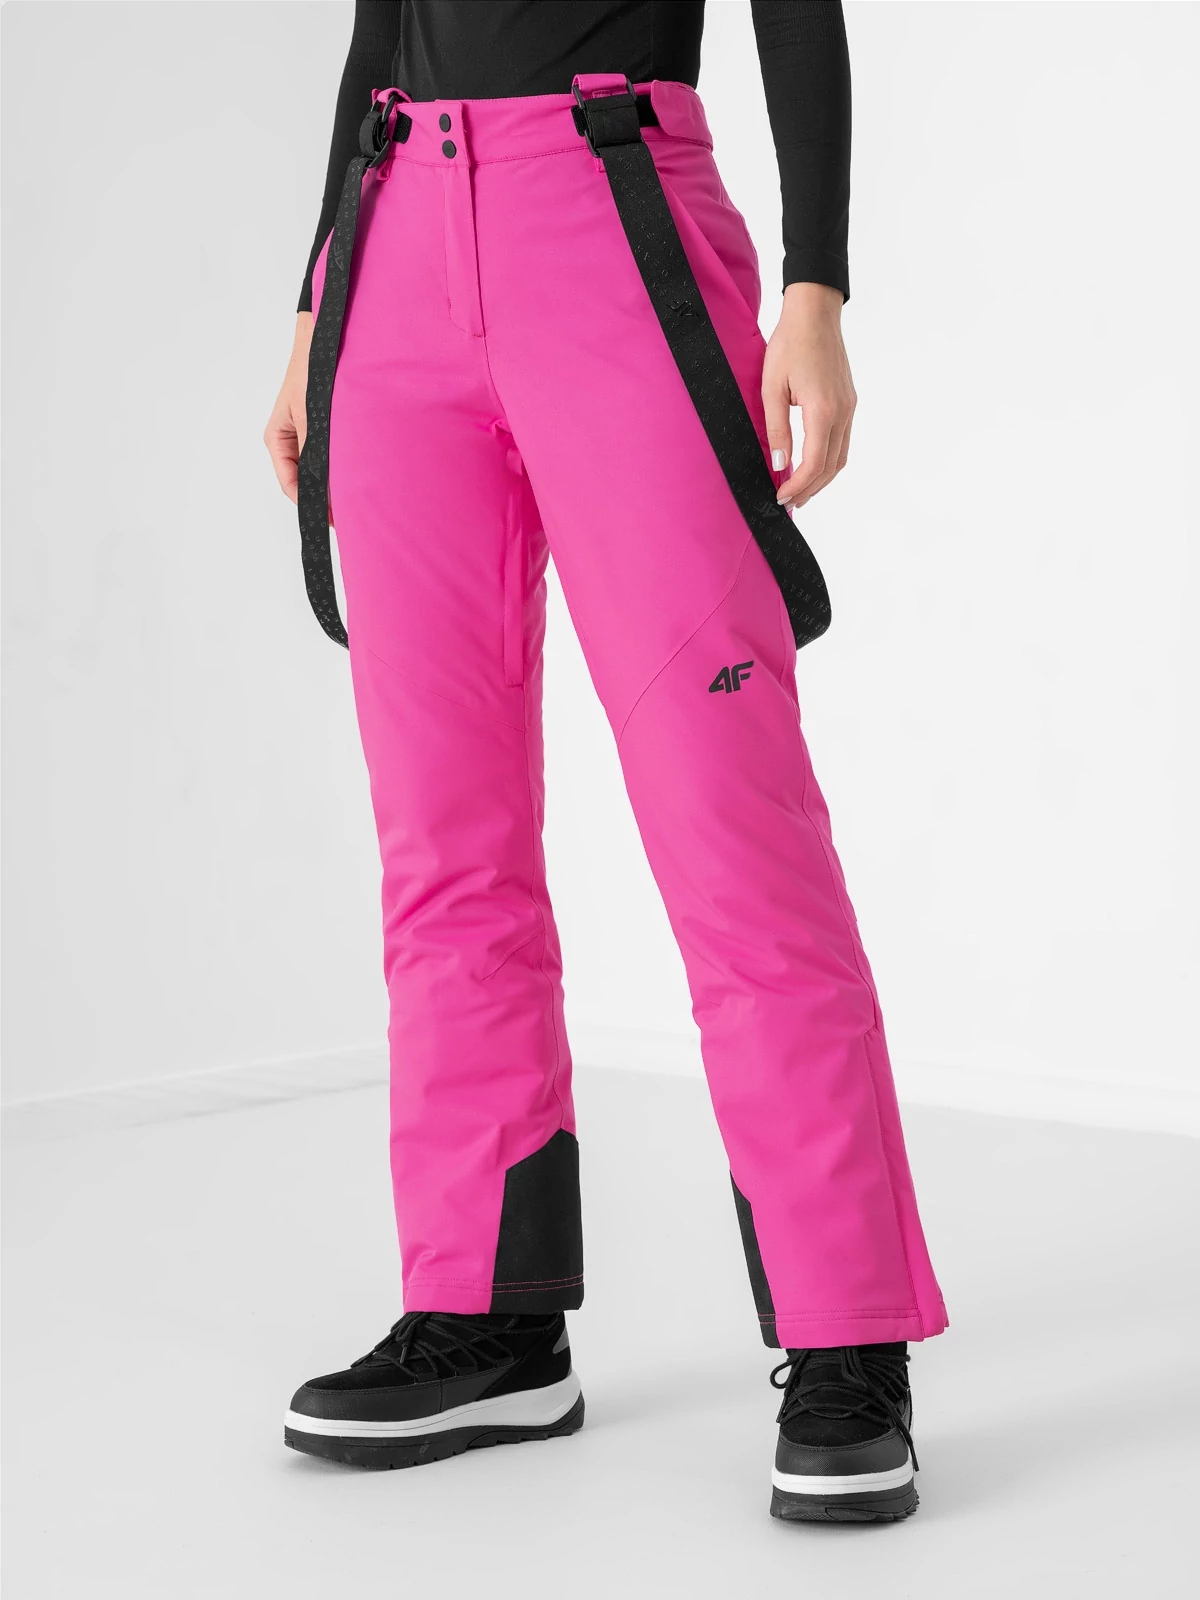 Women\'s ski trousers membrane 8 4F: | Sportswear 000 shoes and